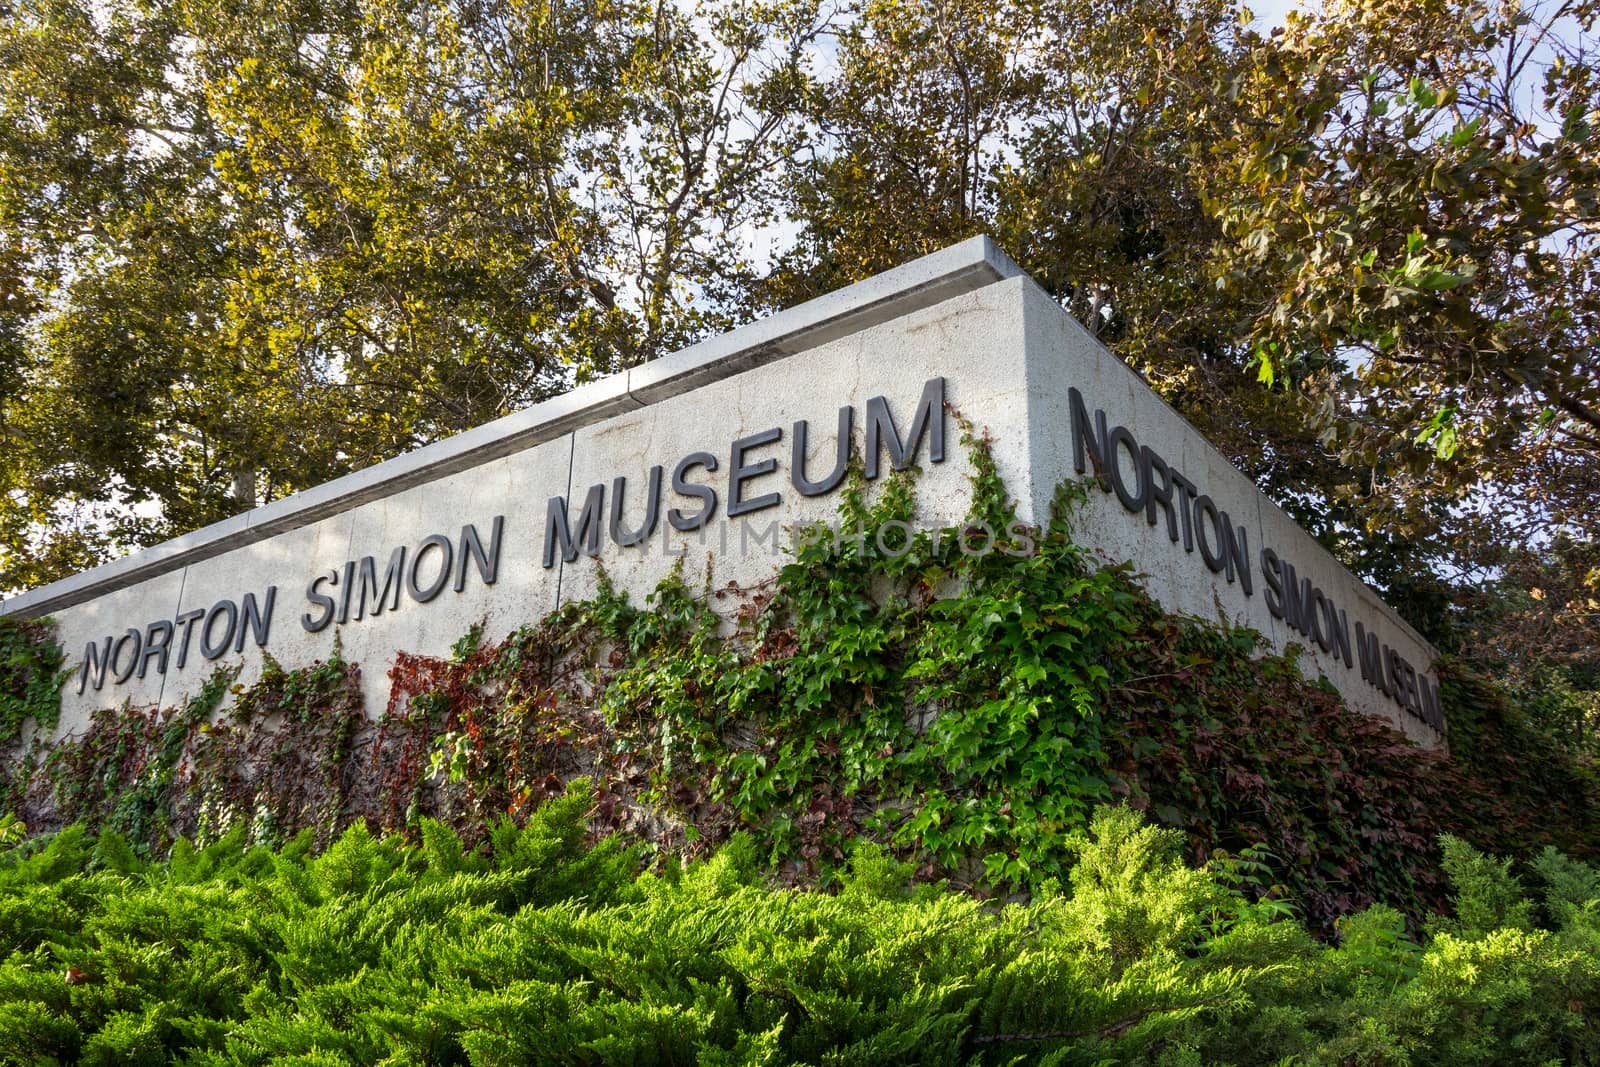 Norton Simon Museum by wolterk